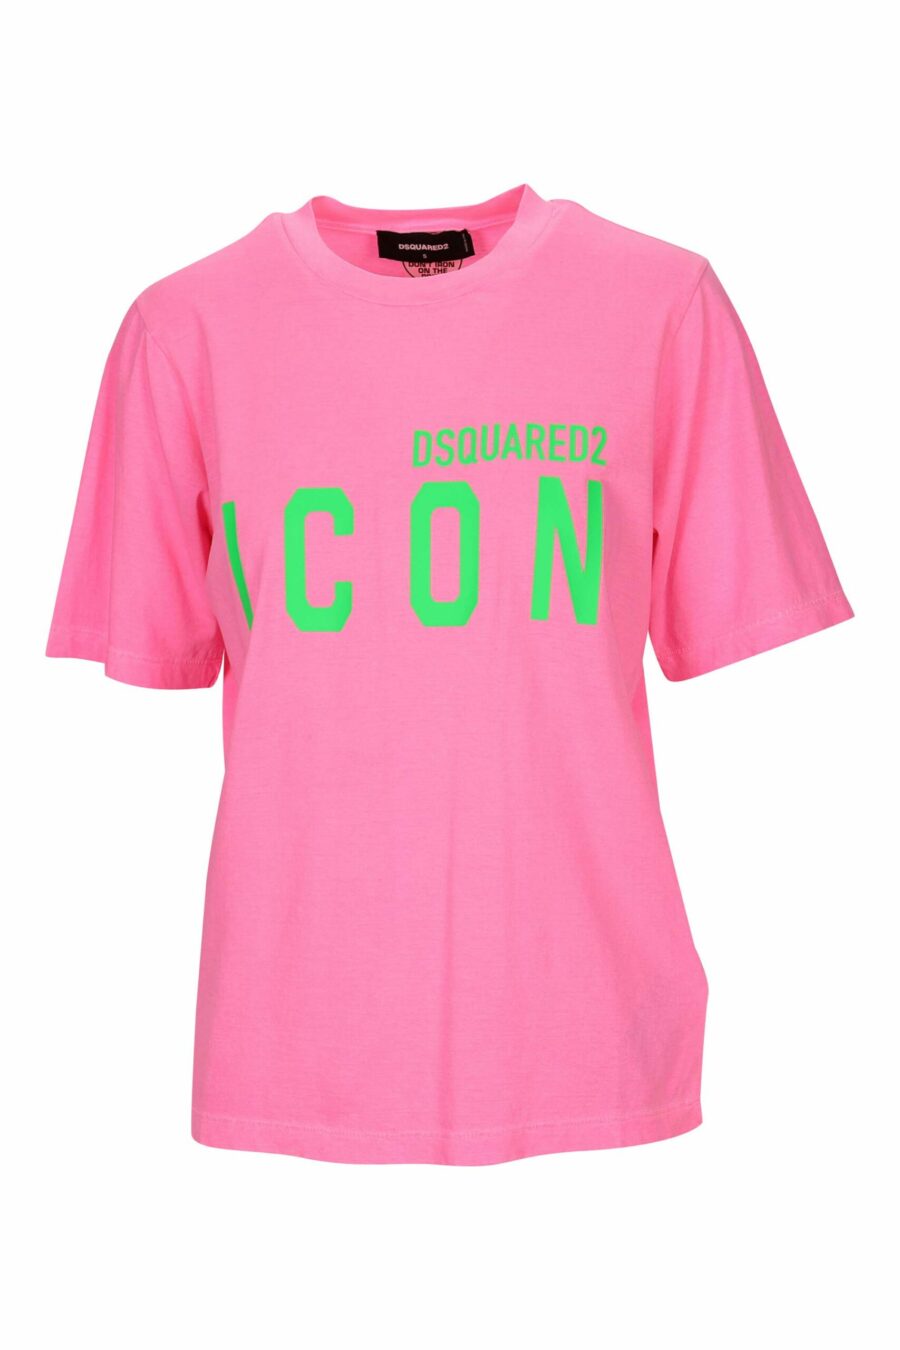 Fuchsiafarbenes T-Shirt mit neongrünem Logo - 8054148405106 skaliert